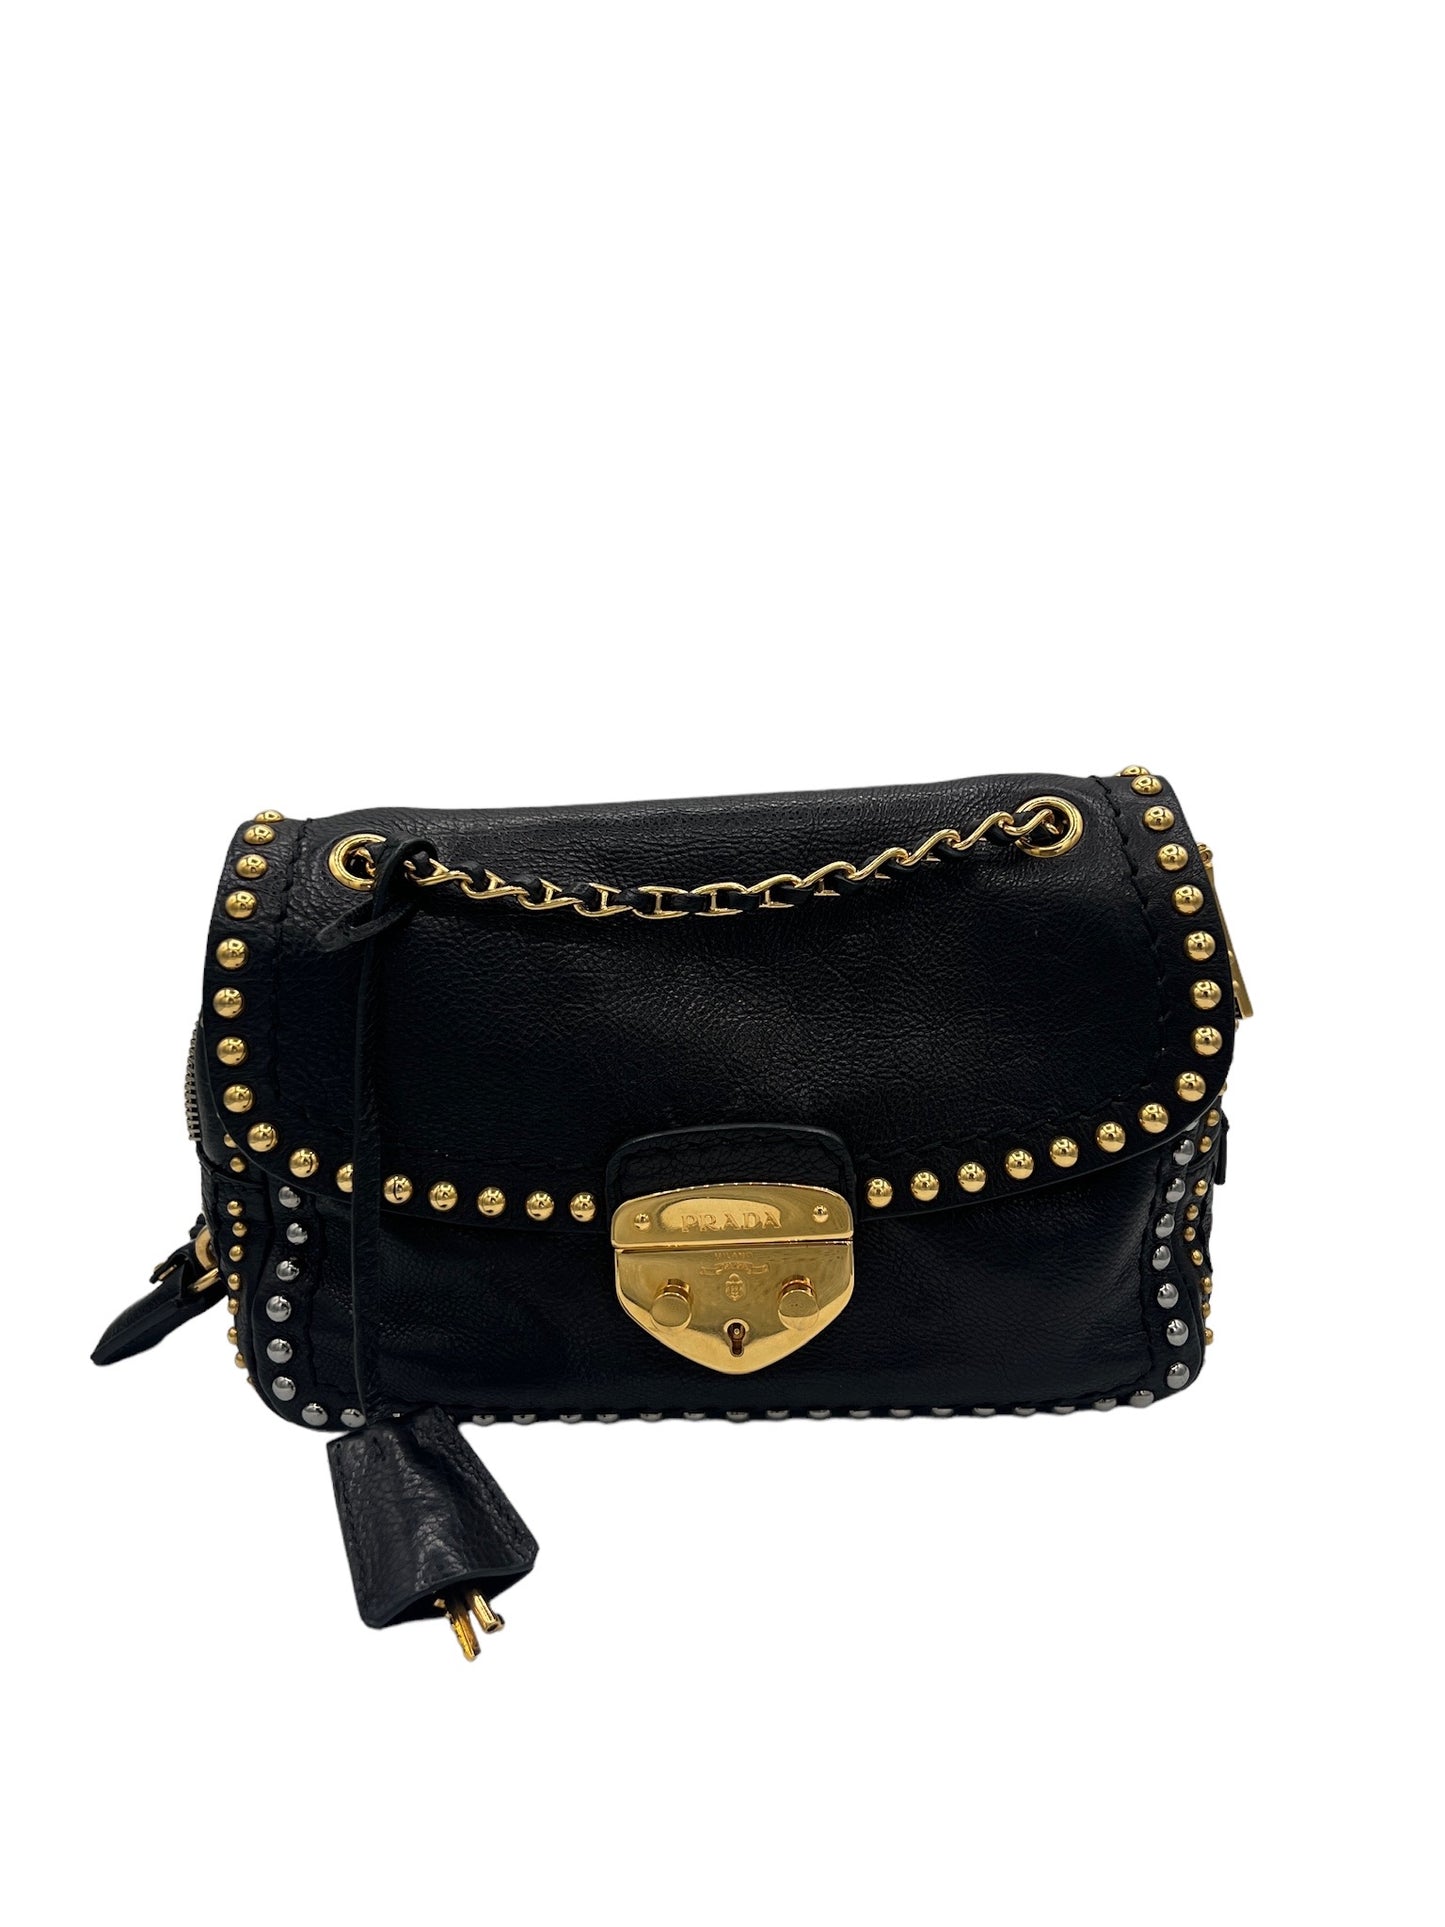 PRADA - Black Glace Calf Studded Pushlock Chain Shoulder Bag